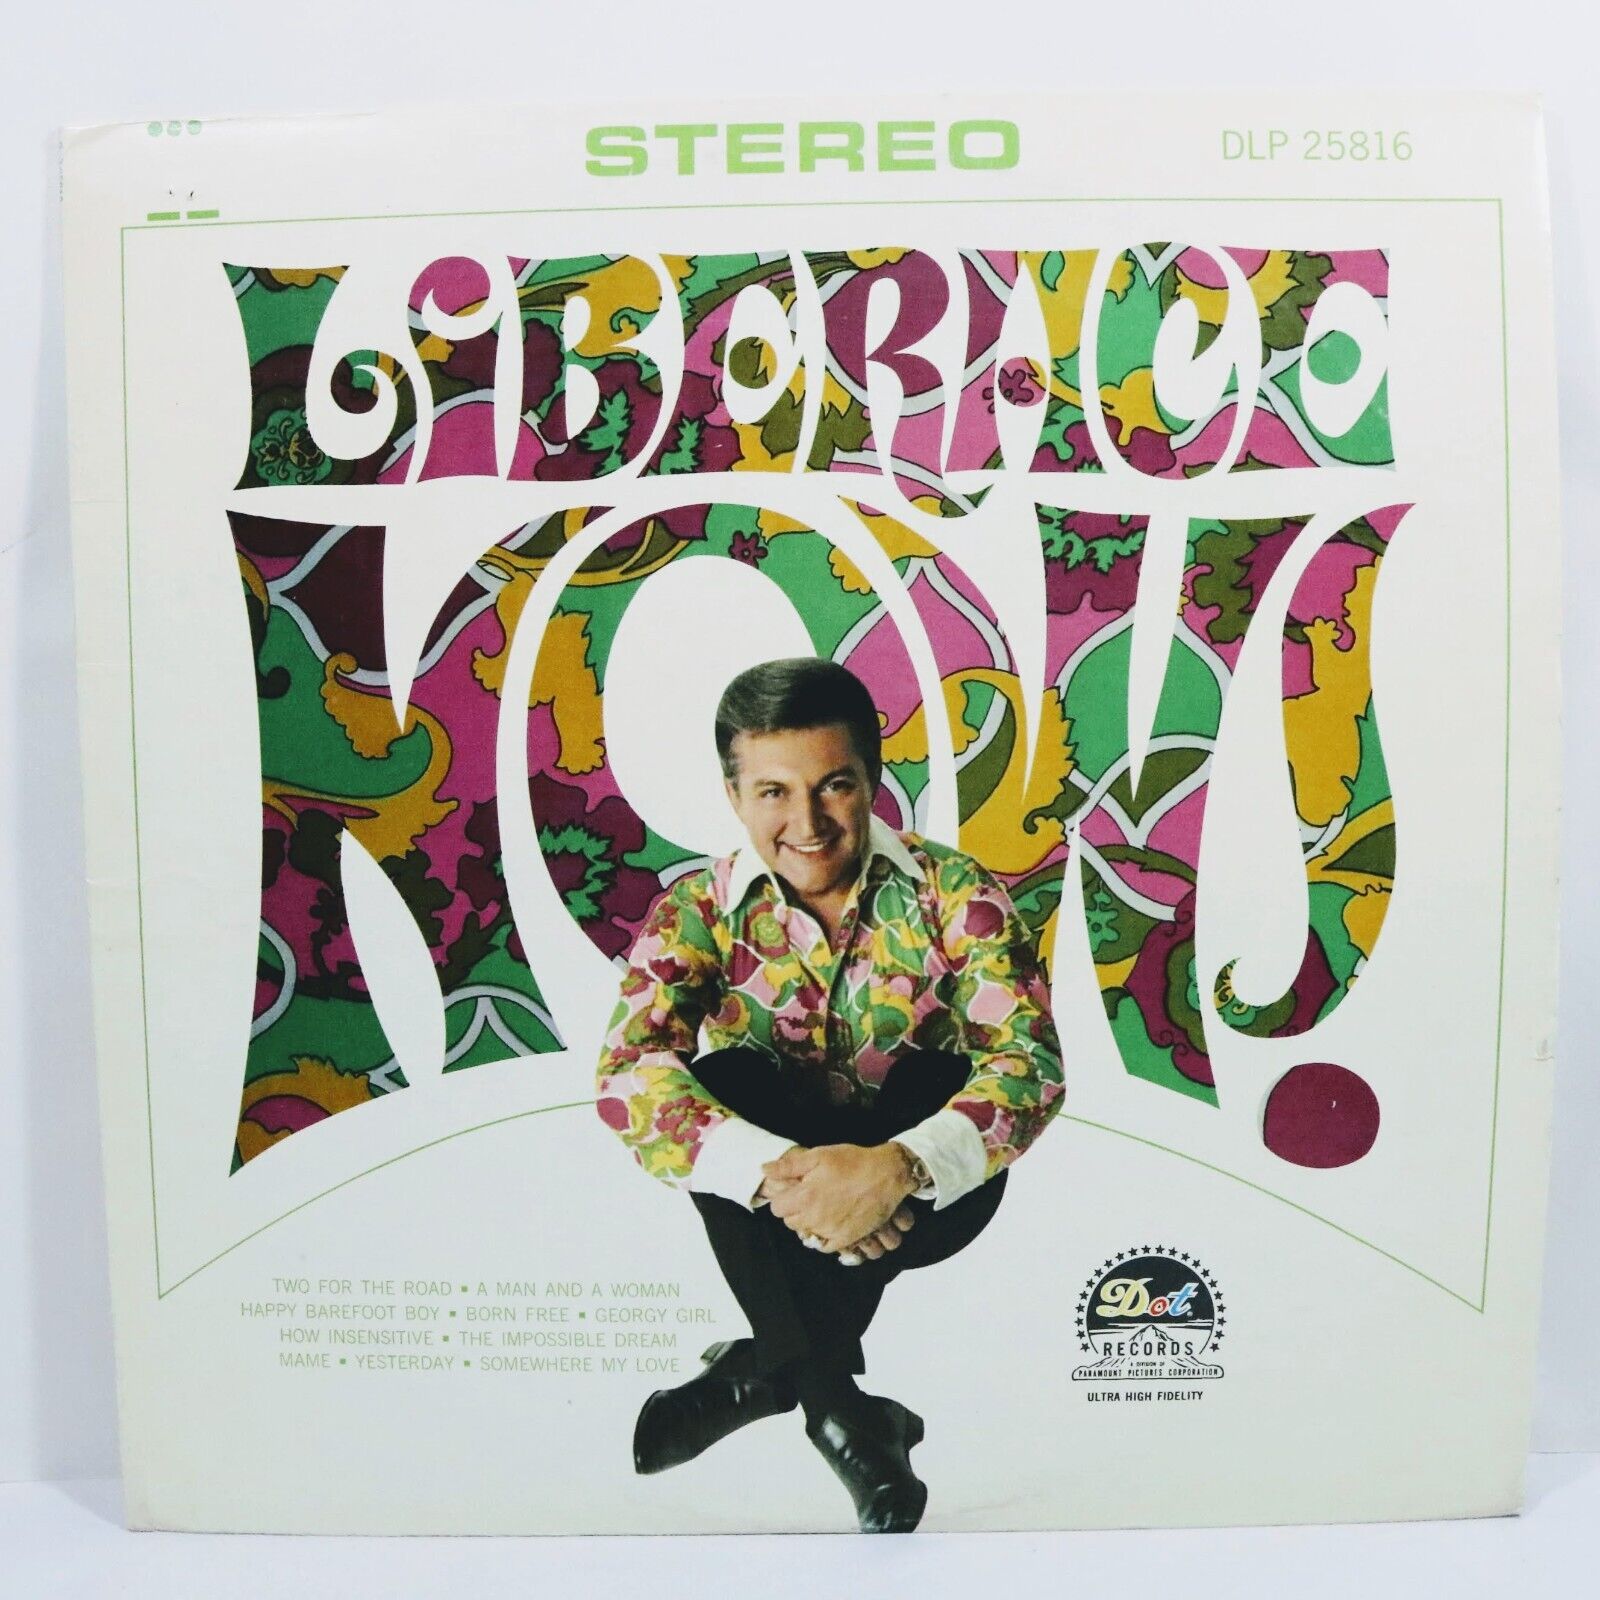 1967 Record Liberace Now